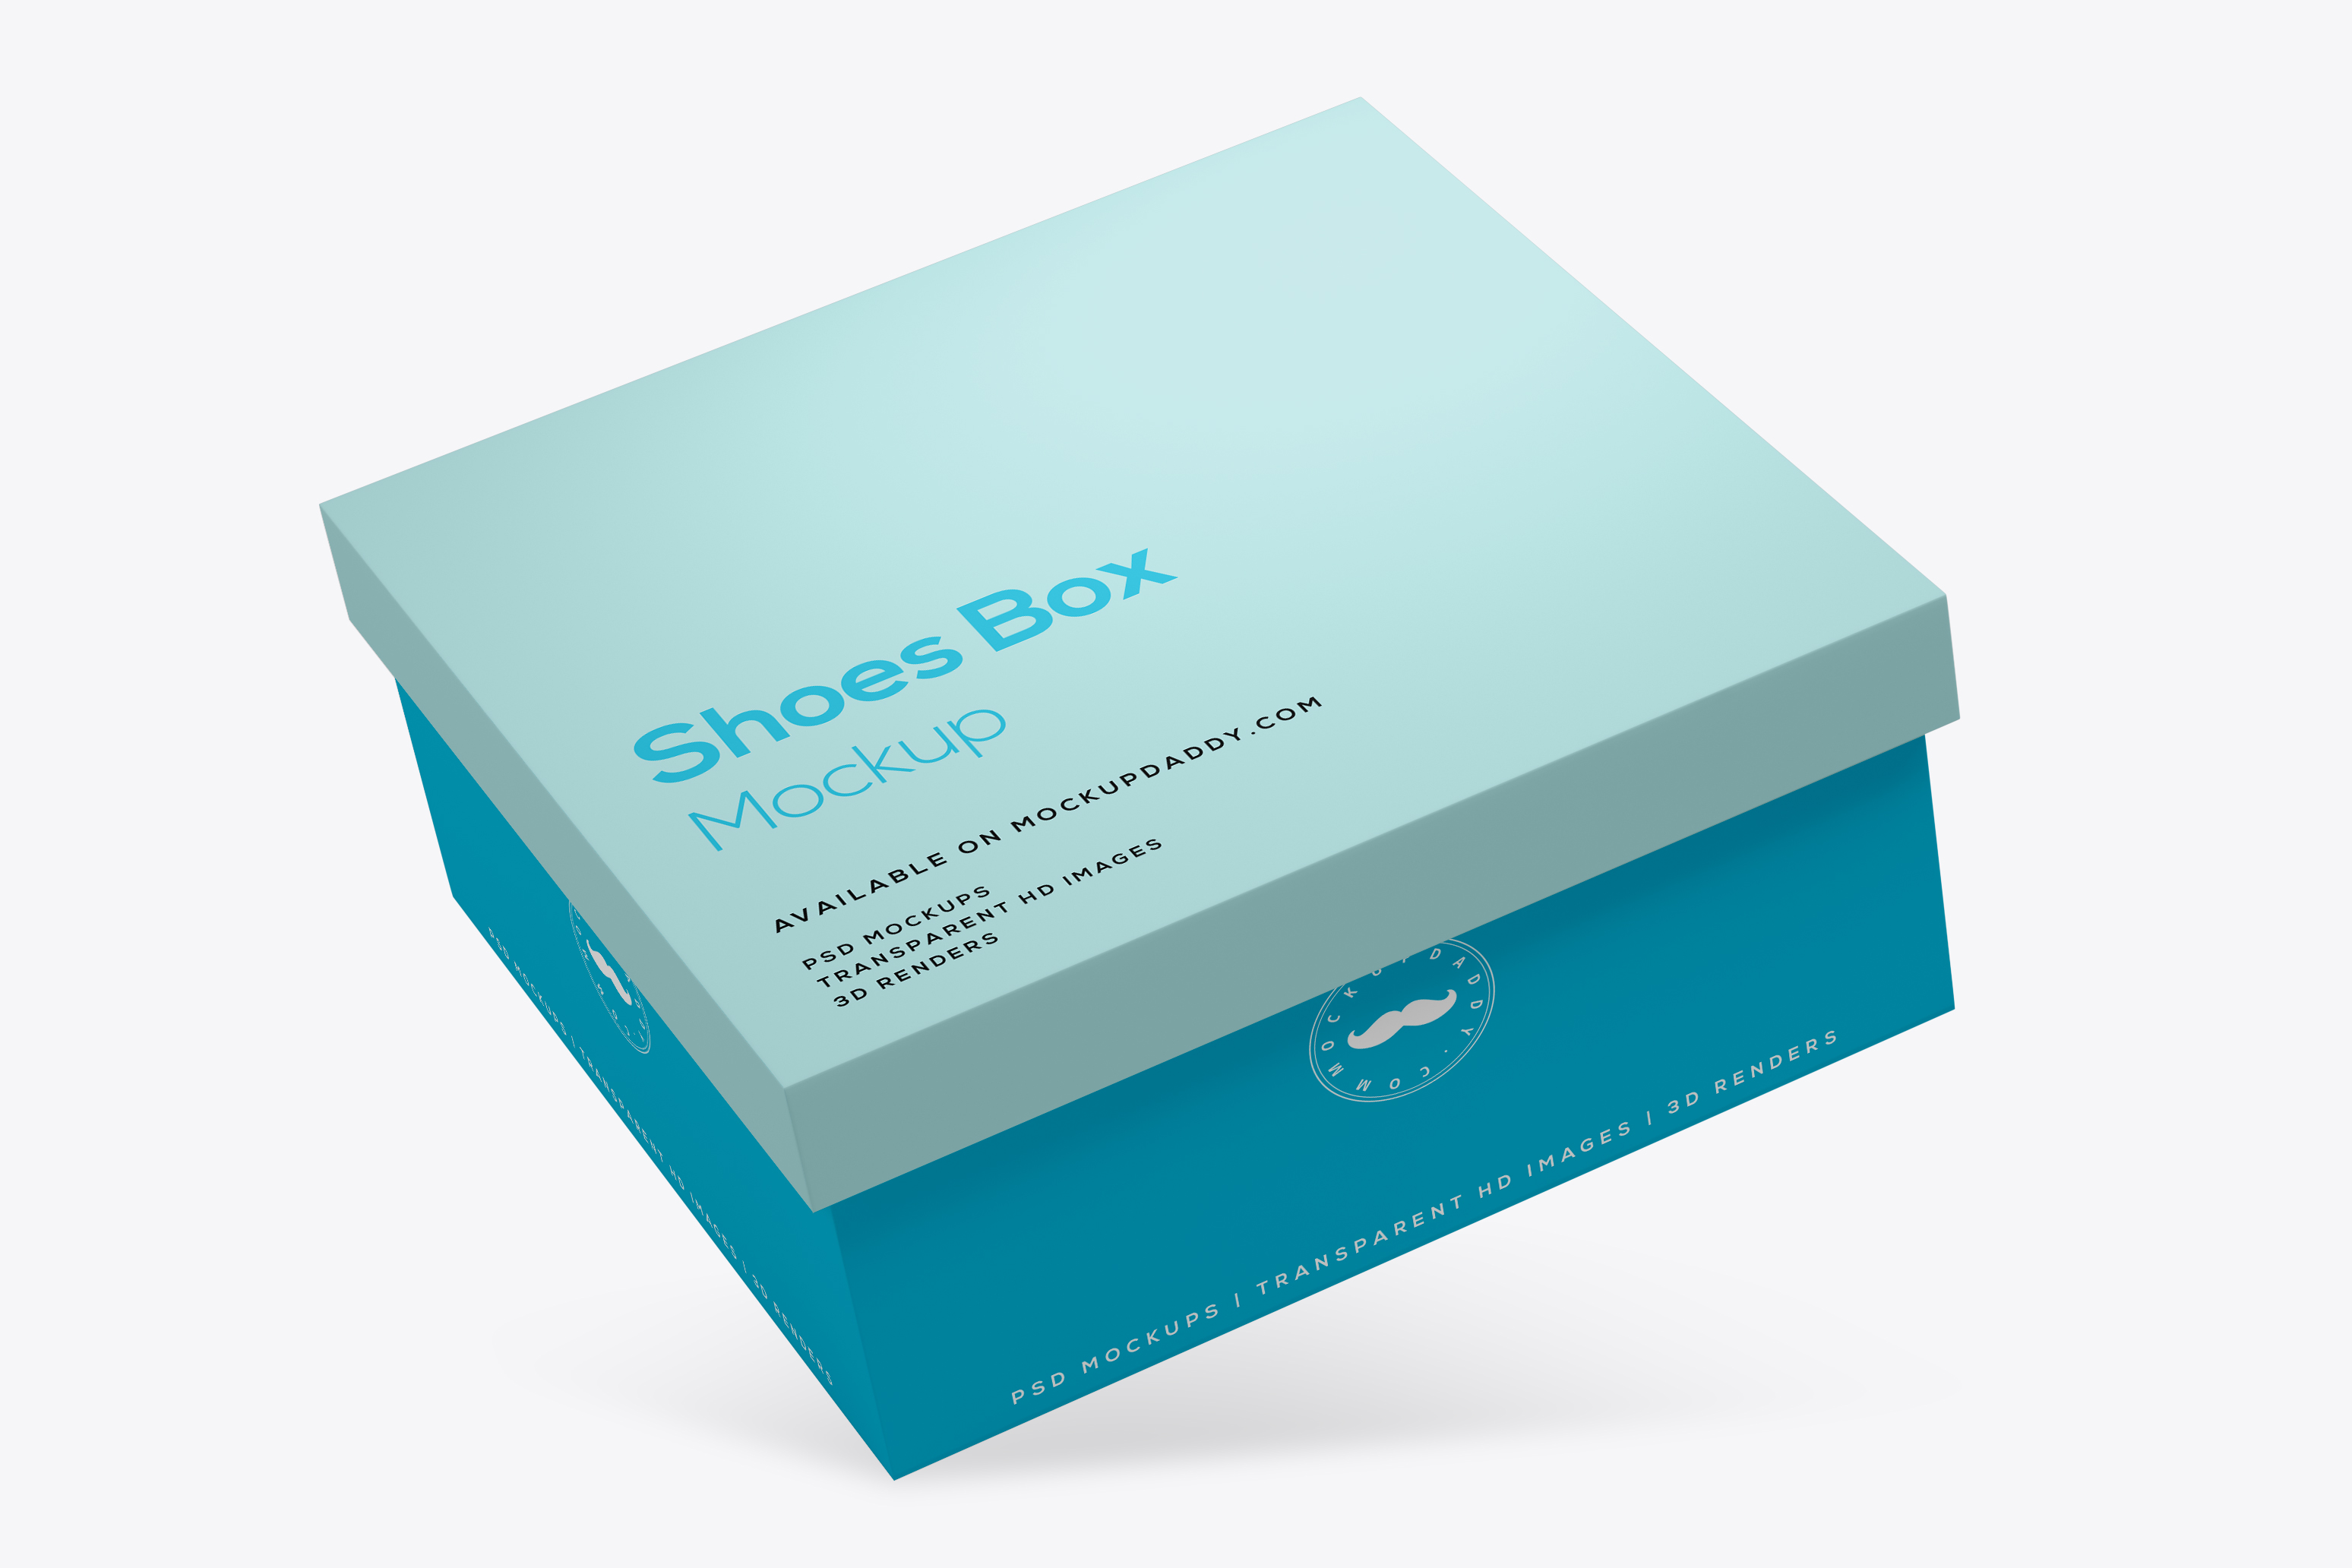 Square Shoes Box Mockup Free Download - Mockup Daddy